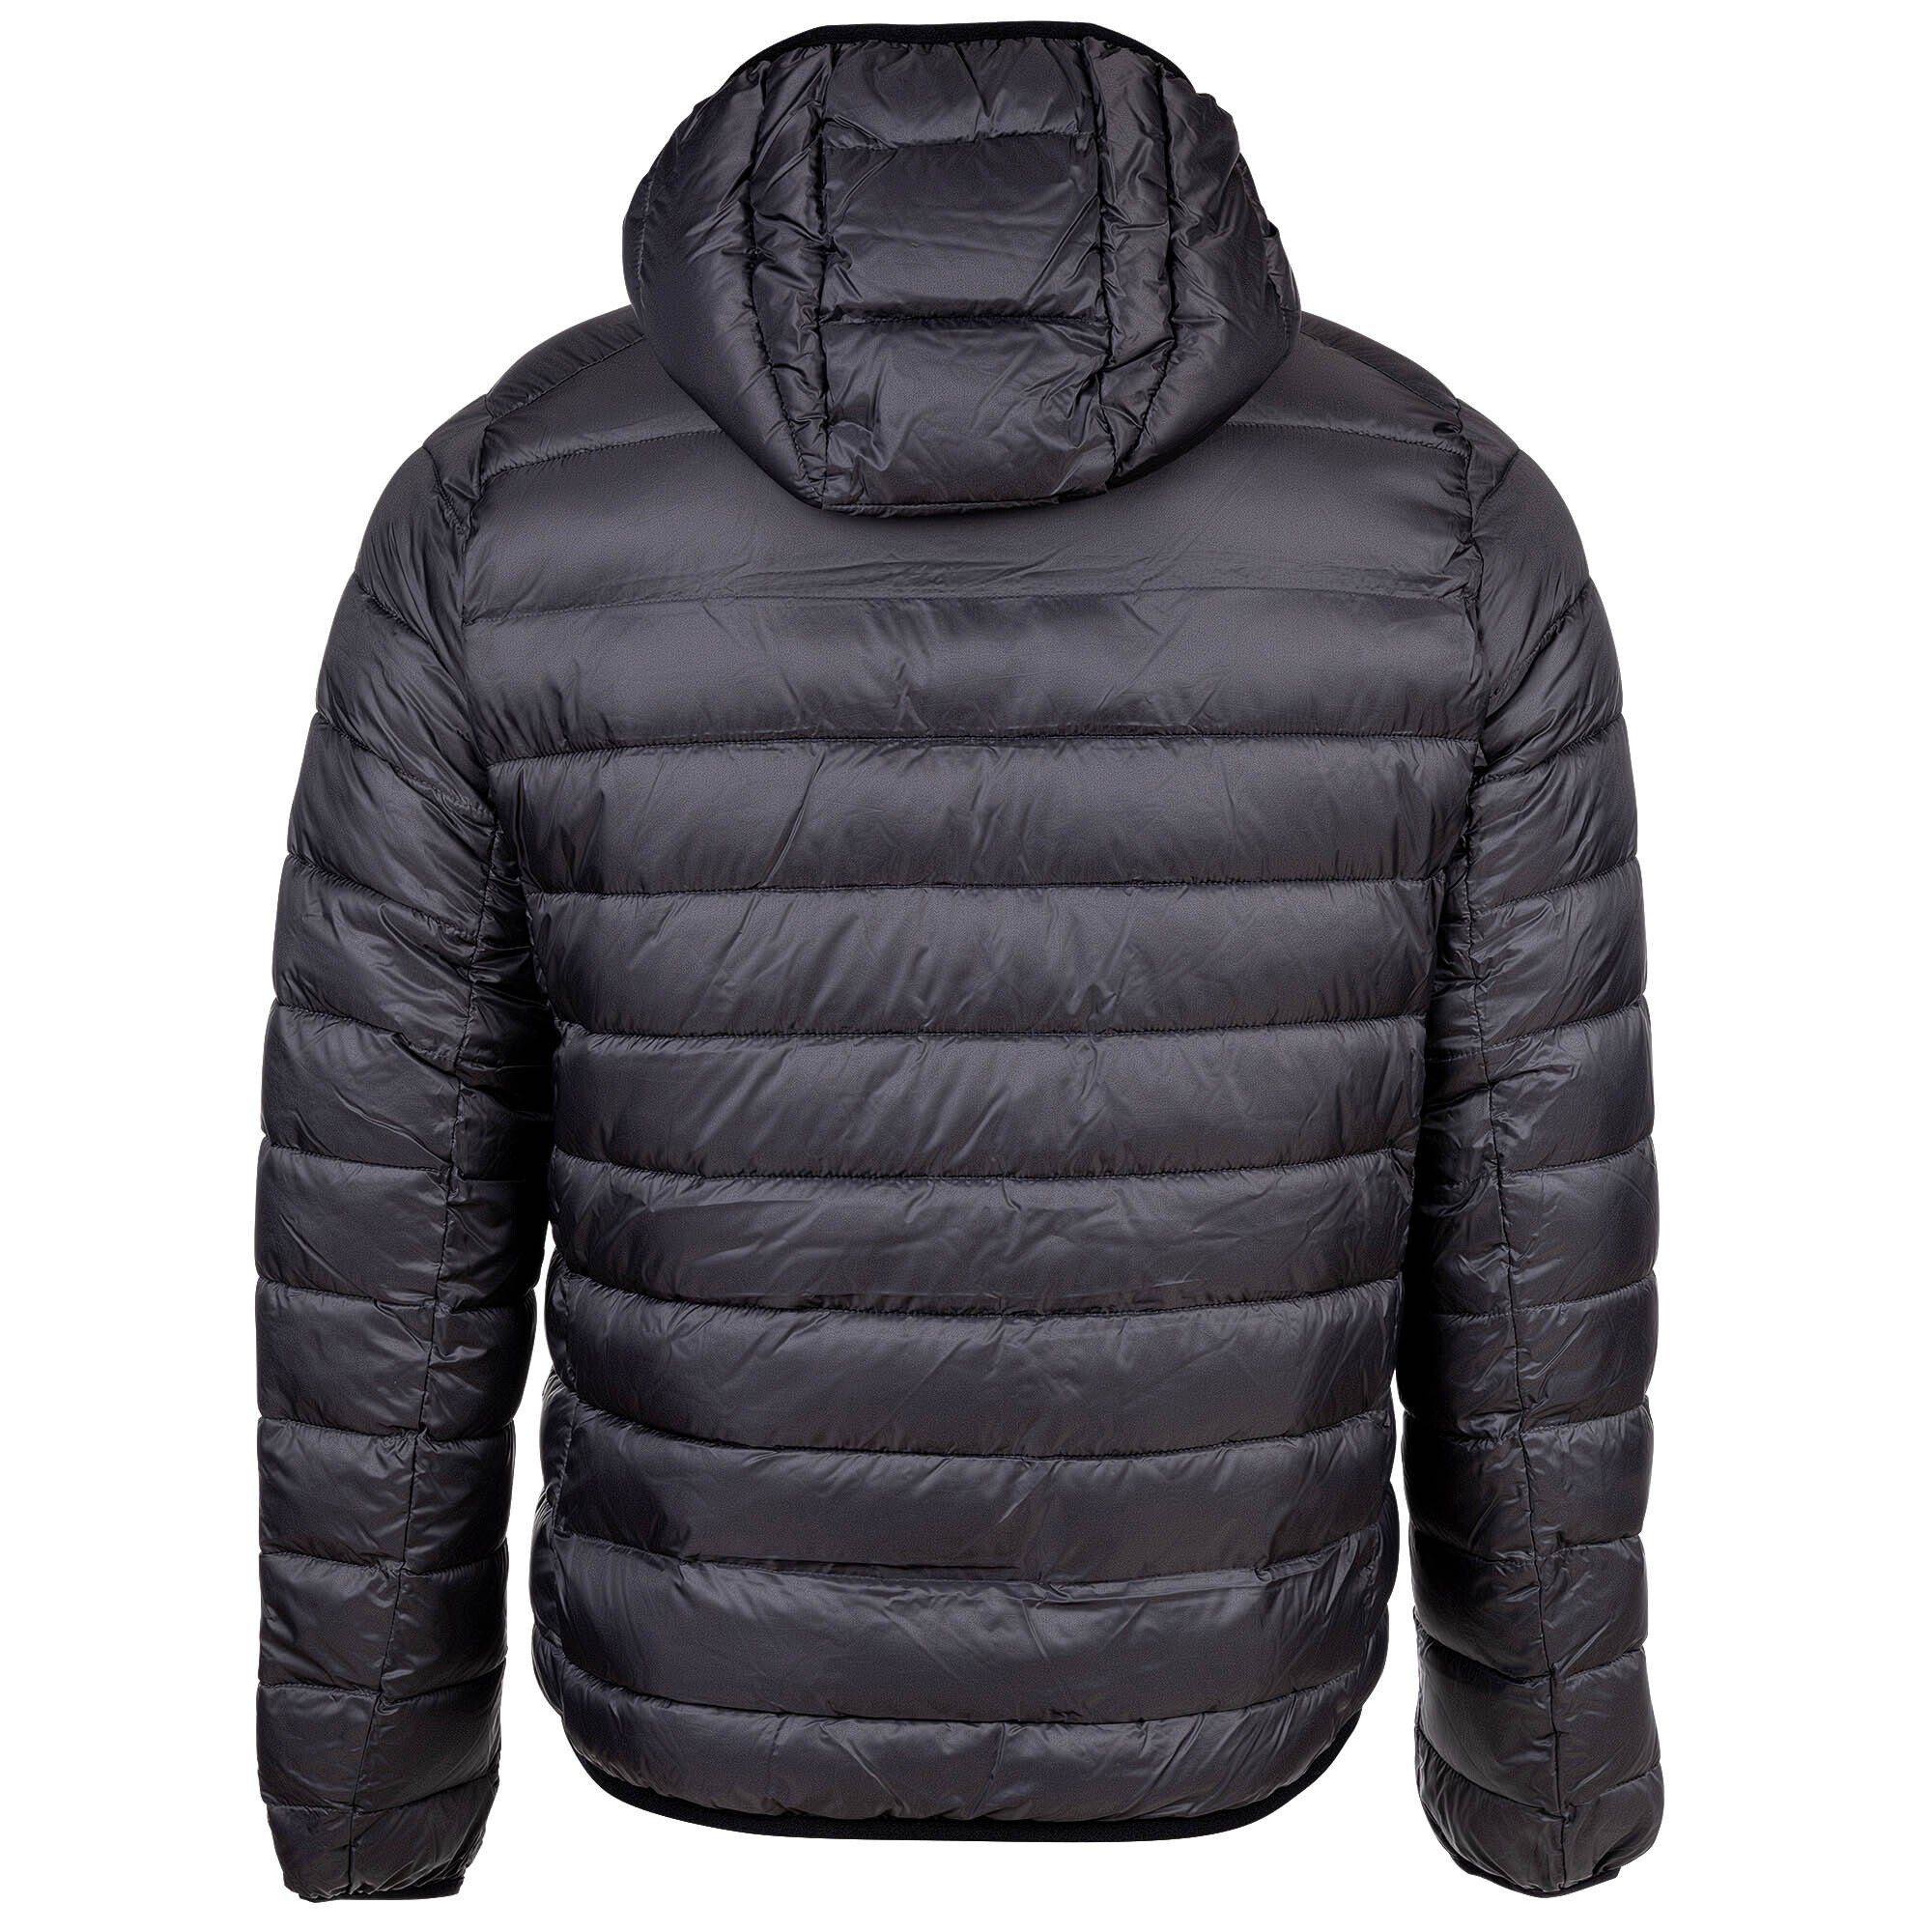 Hooded Jacke Jacket, Champion Grau Outdoor Herren - Steppjacke